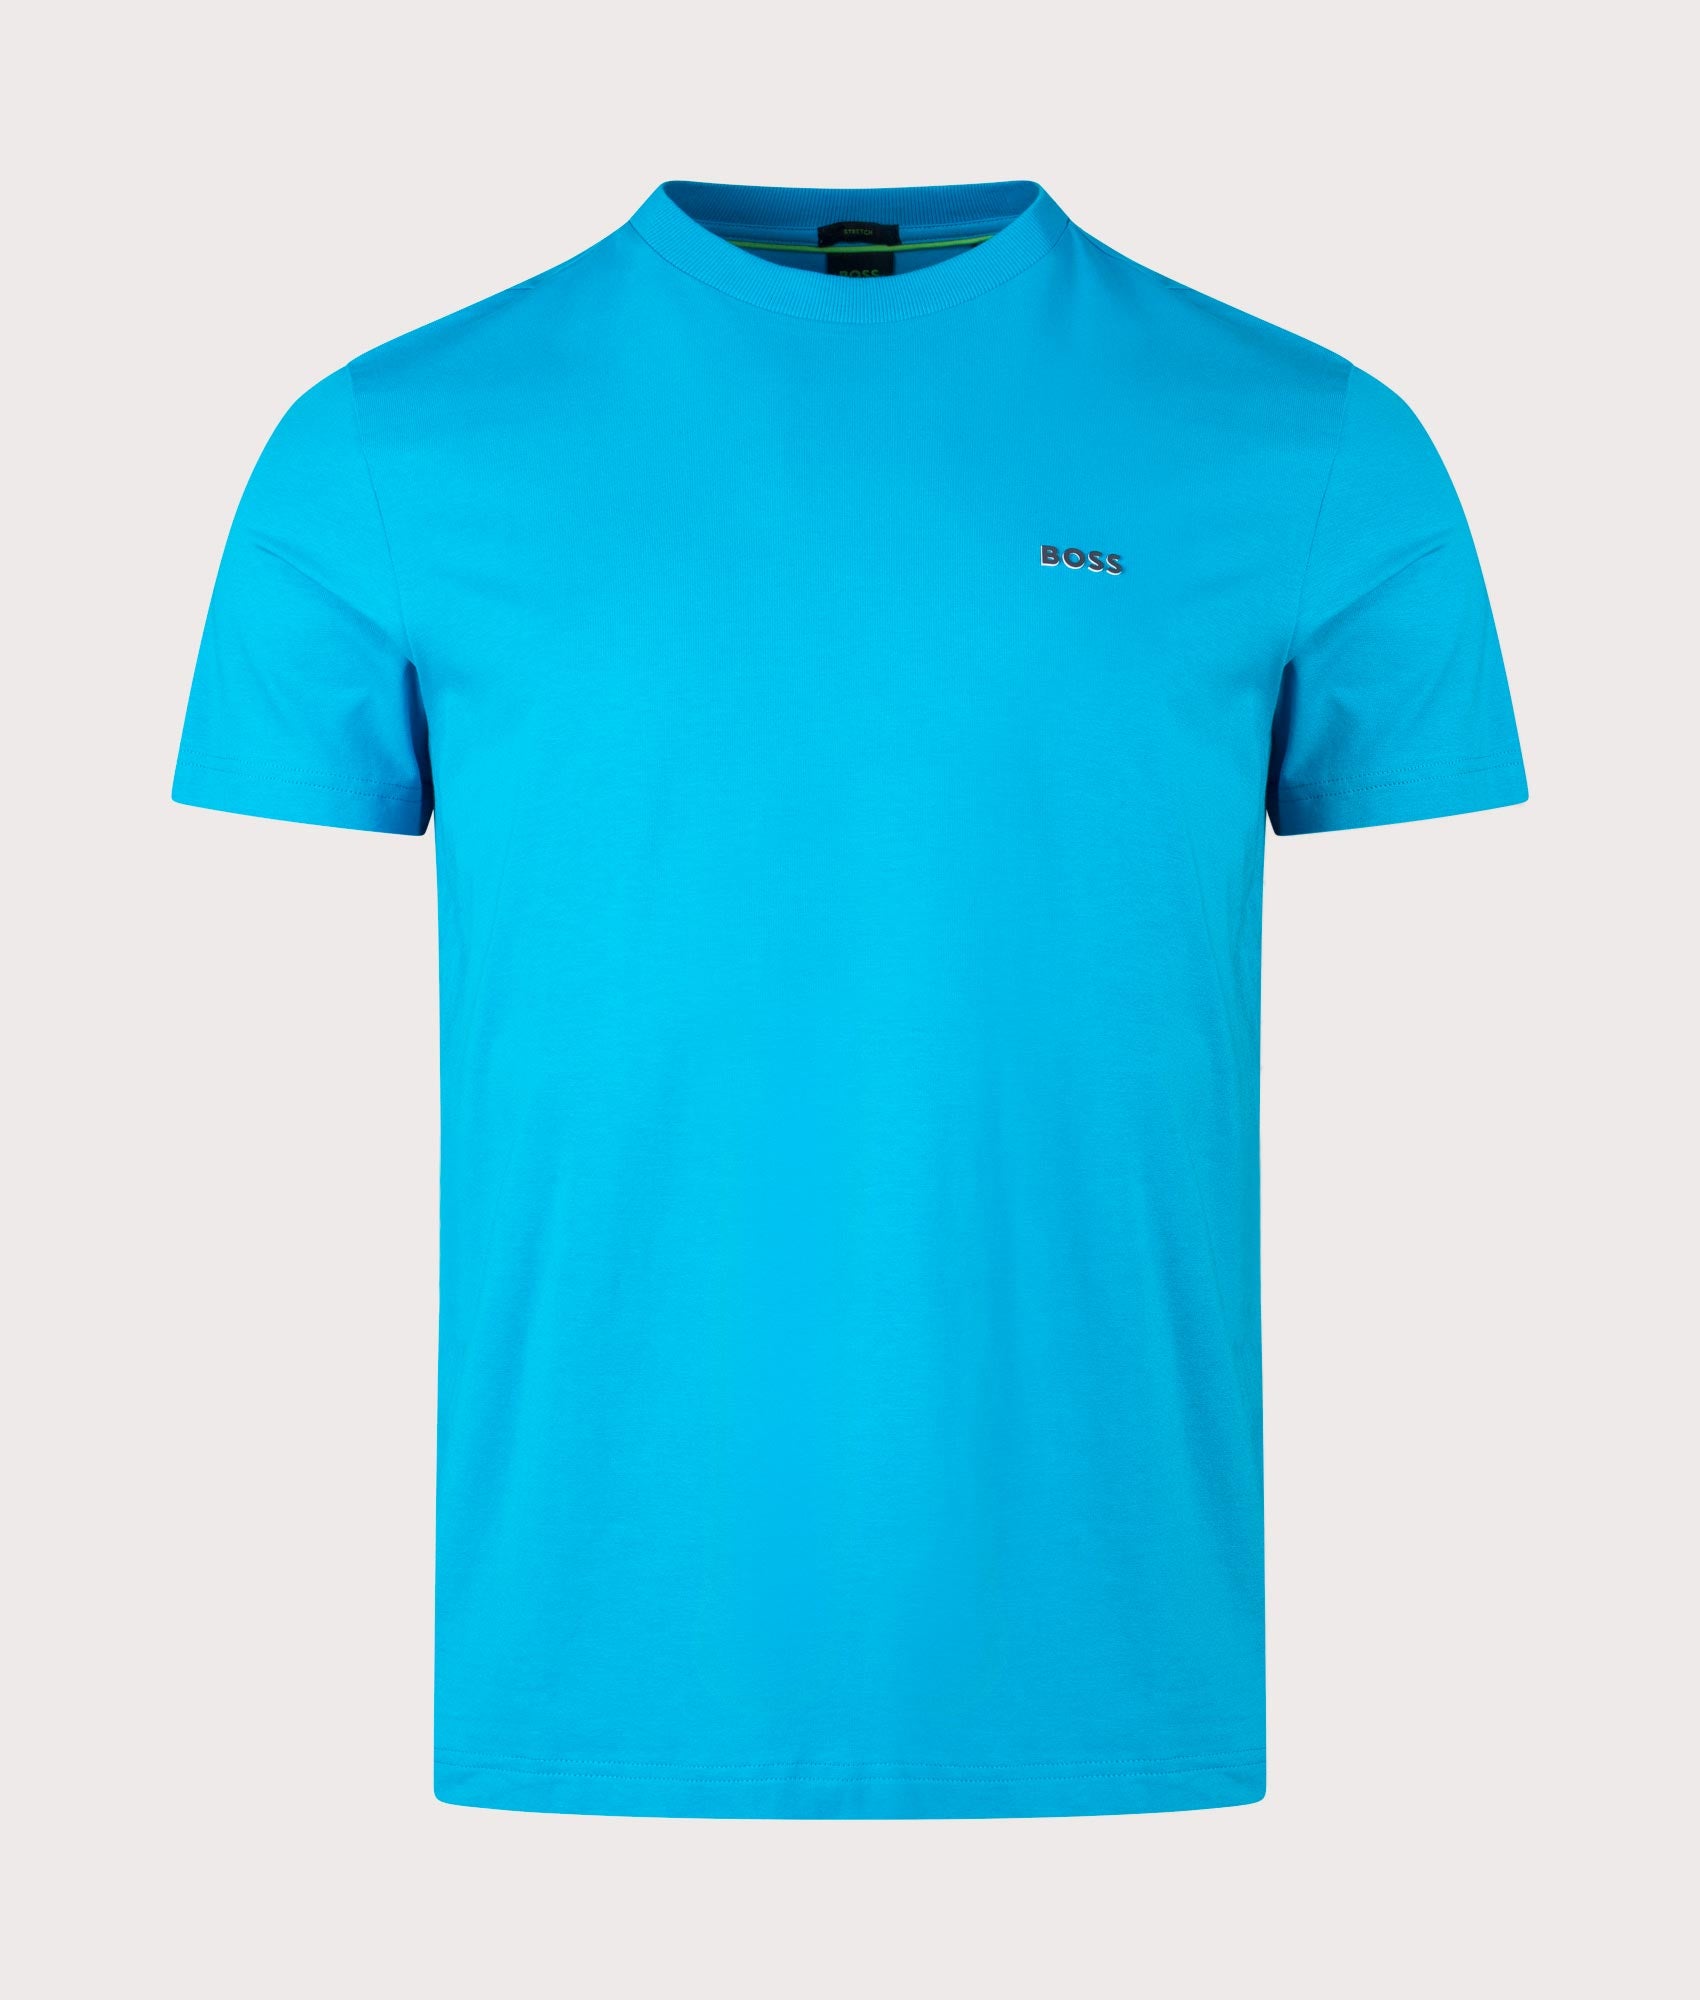 BOSS Mens Crew Neck Tee T-Shirt - Colour: 442 Turquoise/Aqua - Size: XL